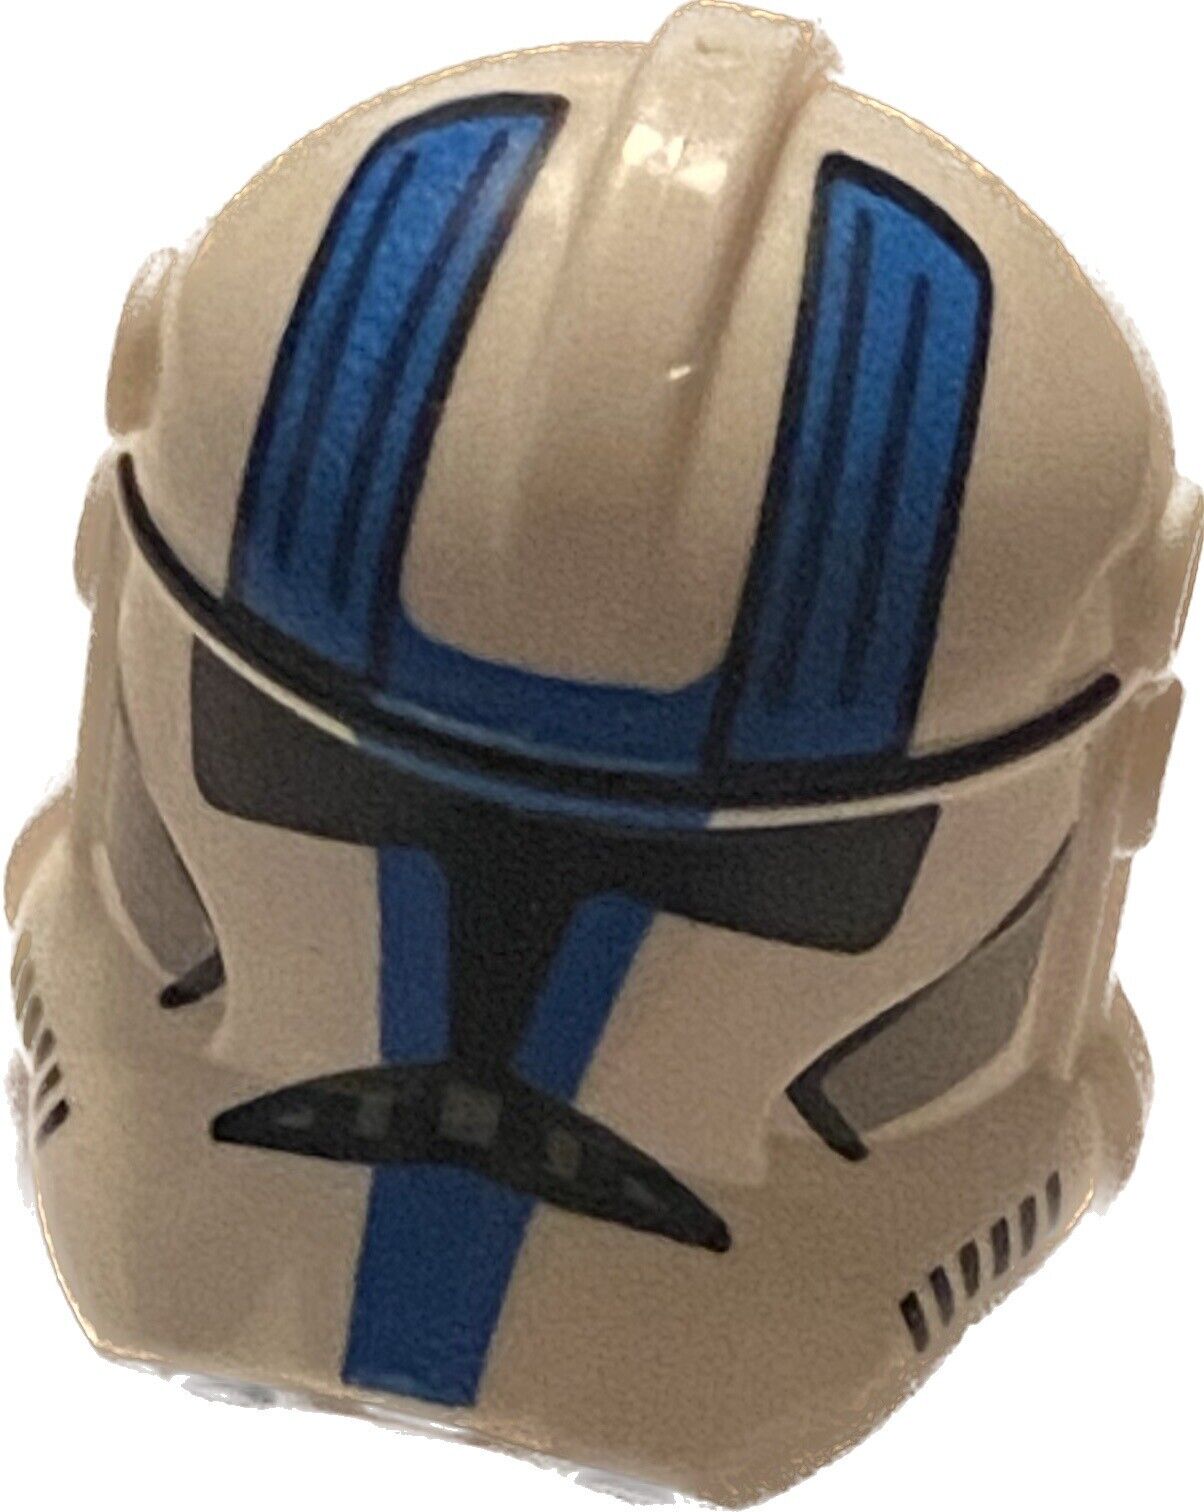 Lego Star Wars Helmet Heavy Trooper Blue and Gray 501st Legion Pattern Helmet